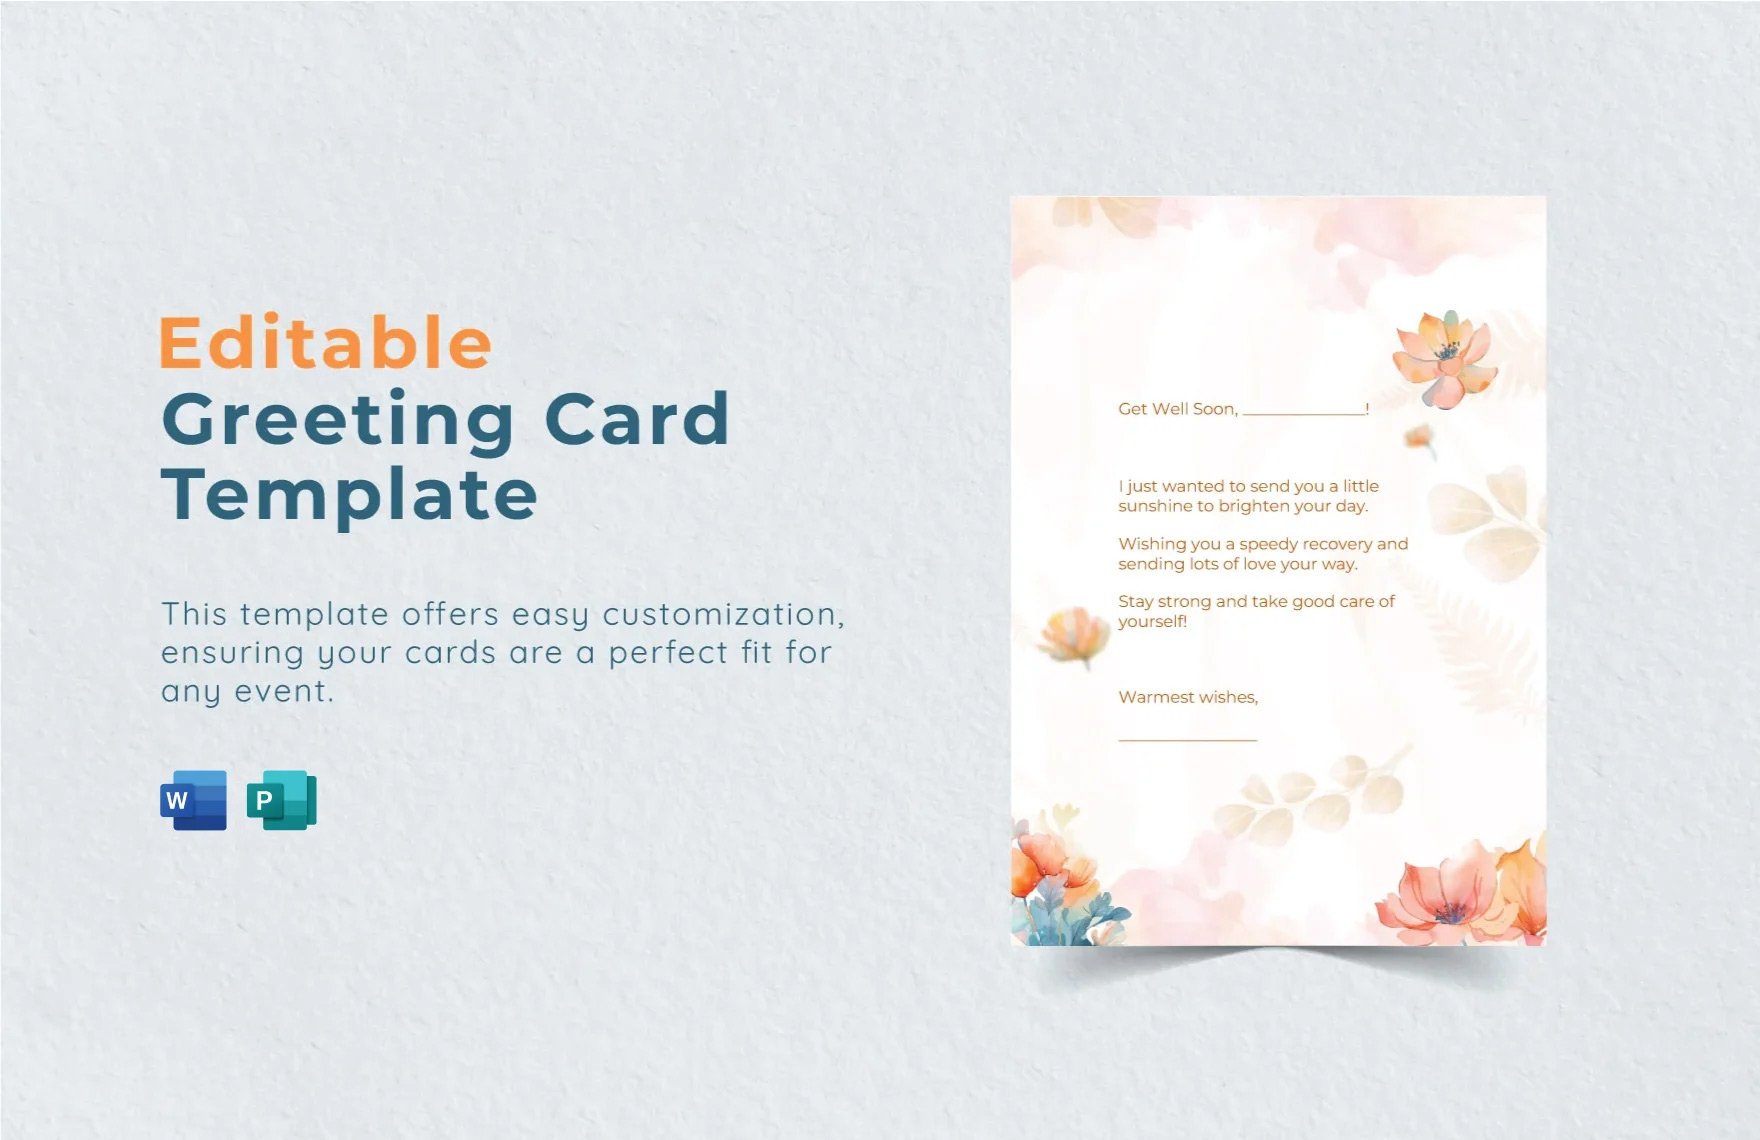 Editable Greeting Card Template